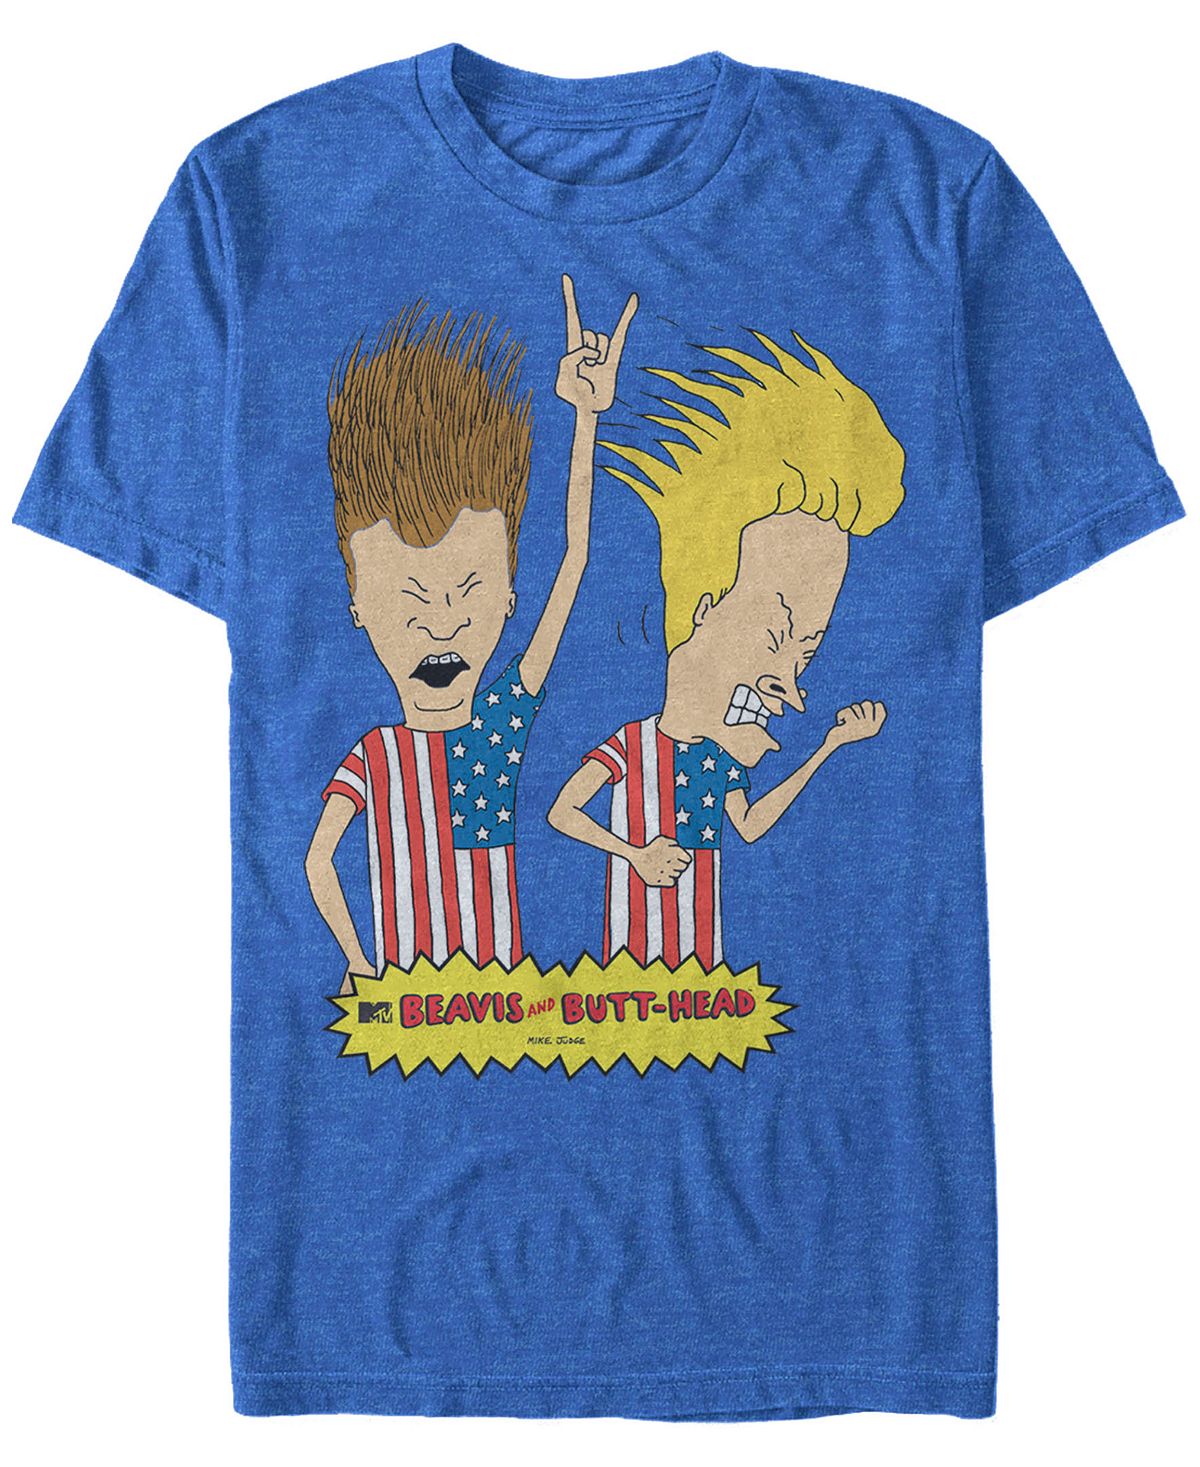 Мужская футболка с коротким рукавом с логотипом beavis and butthead mtv rock out merica Fifth Sun, мульти